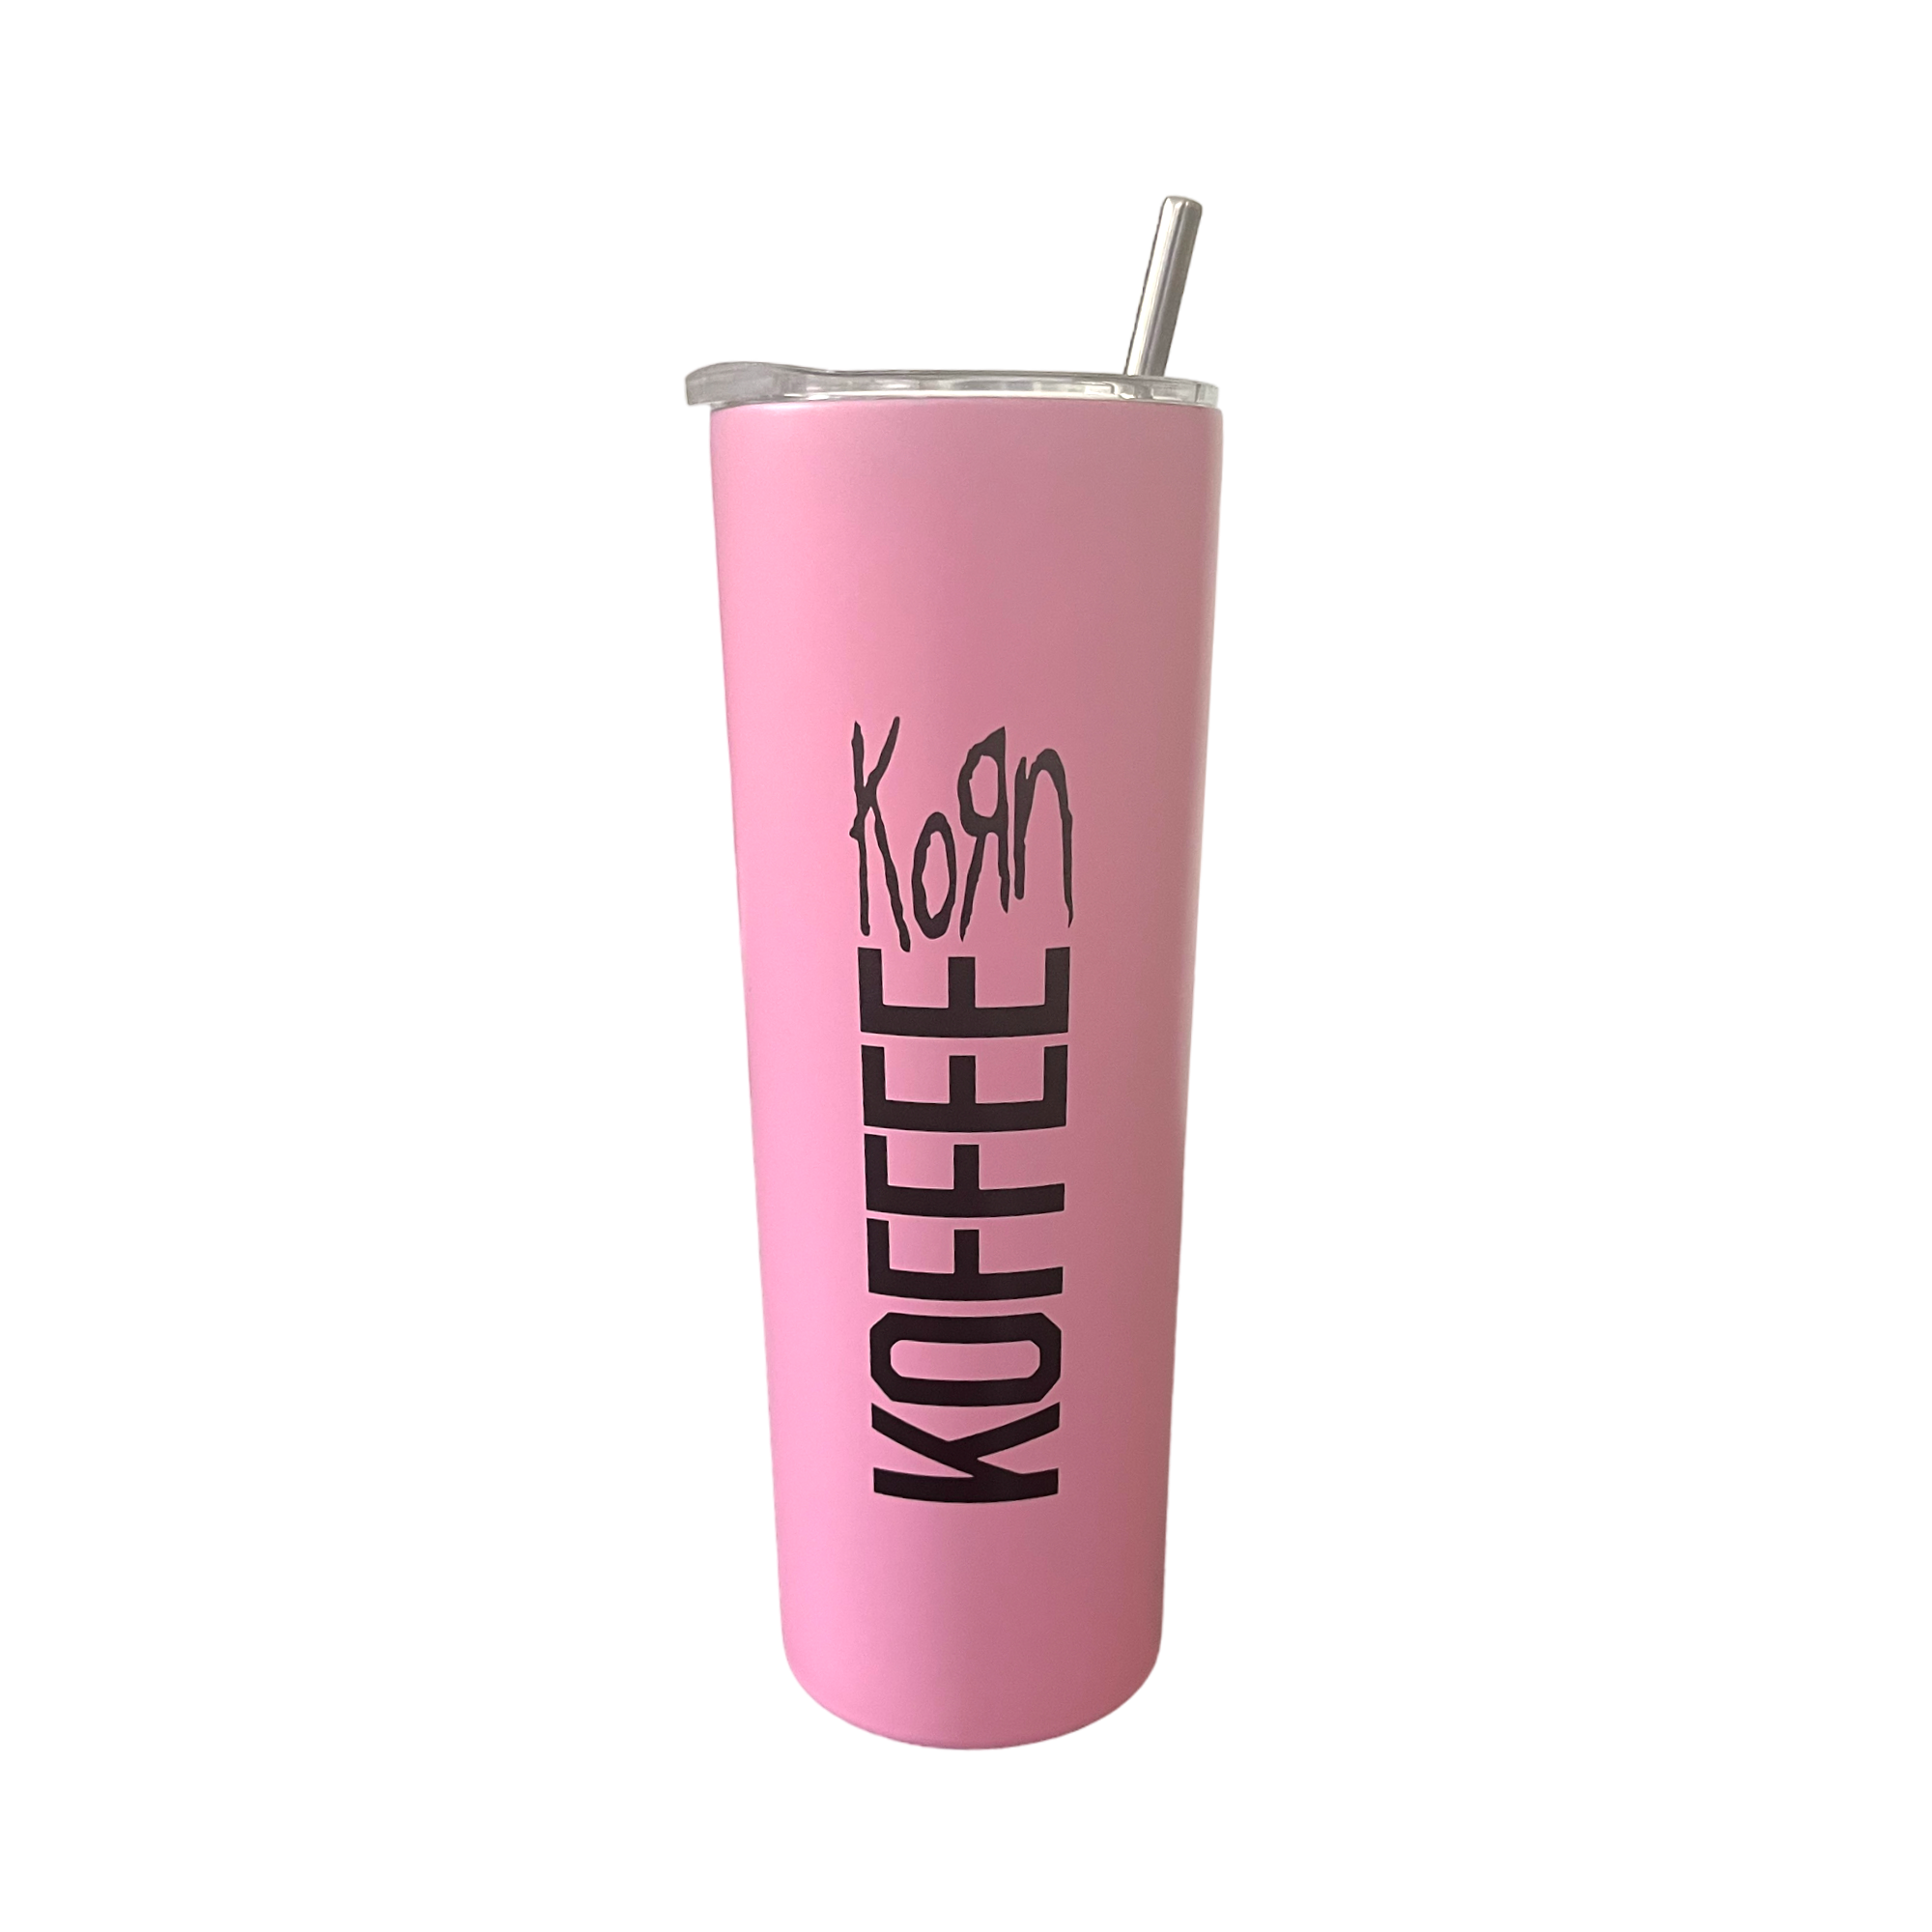 Korn Koffee Pink Tumbler